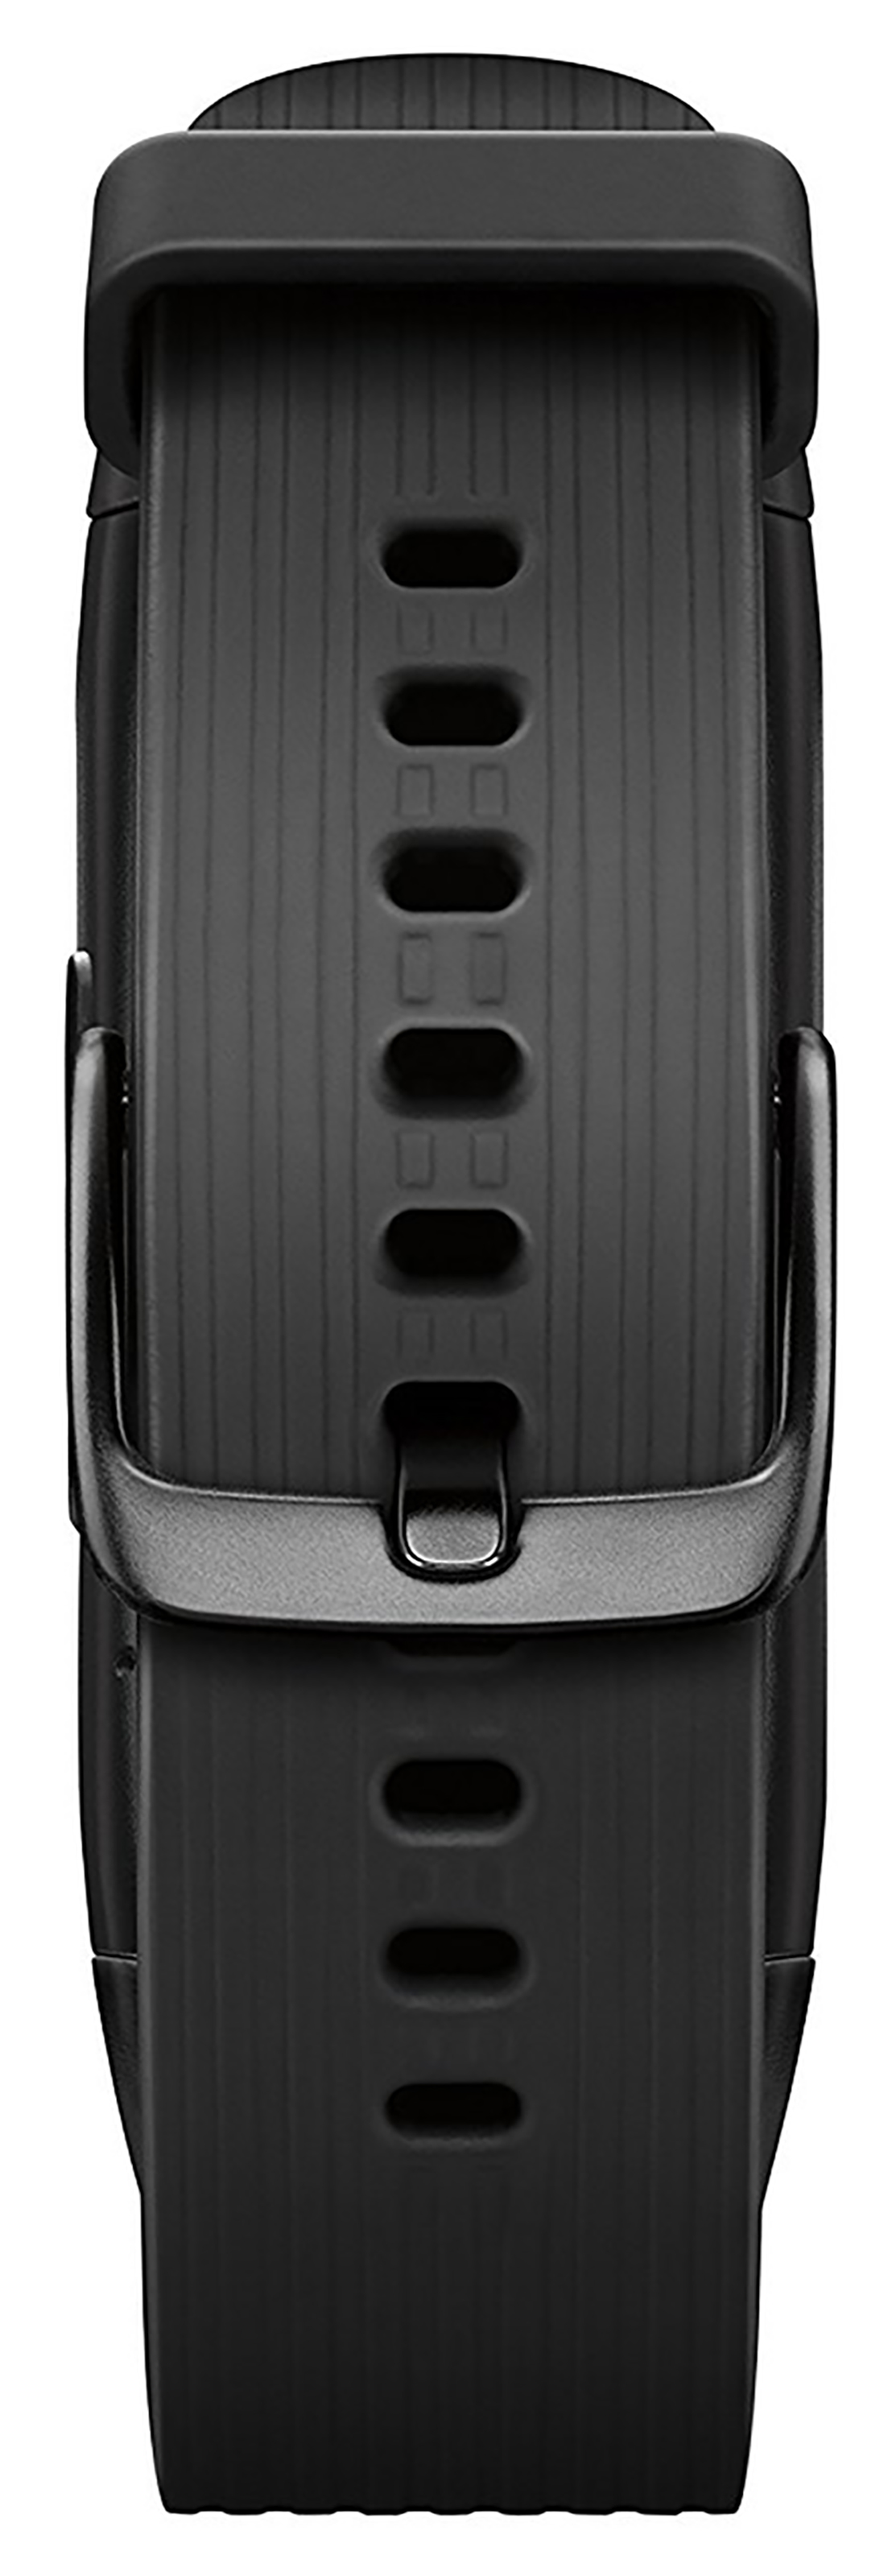 SAMSUNG Gear Fit2 Pro Black Large - SM-R365NZKAXAR - image 3 of 18